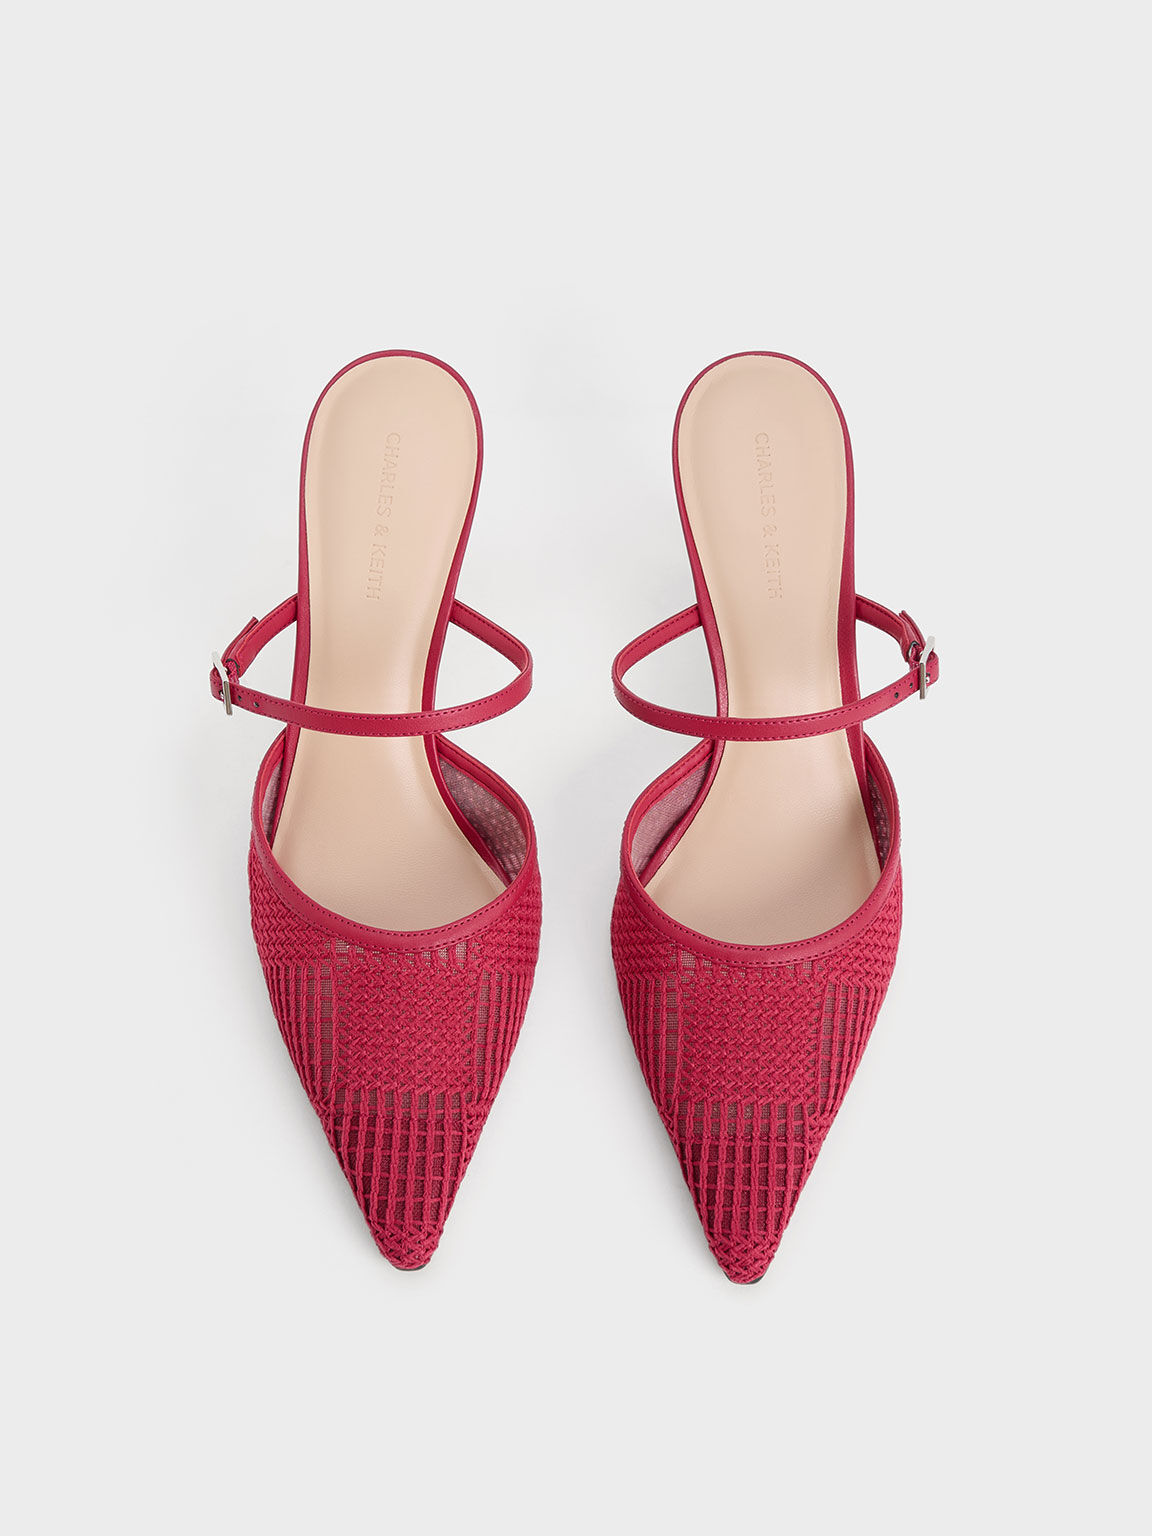 Designer shoes for women - Christian Louboutin United States